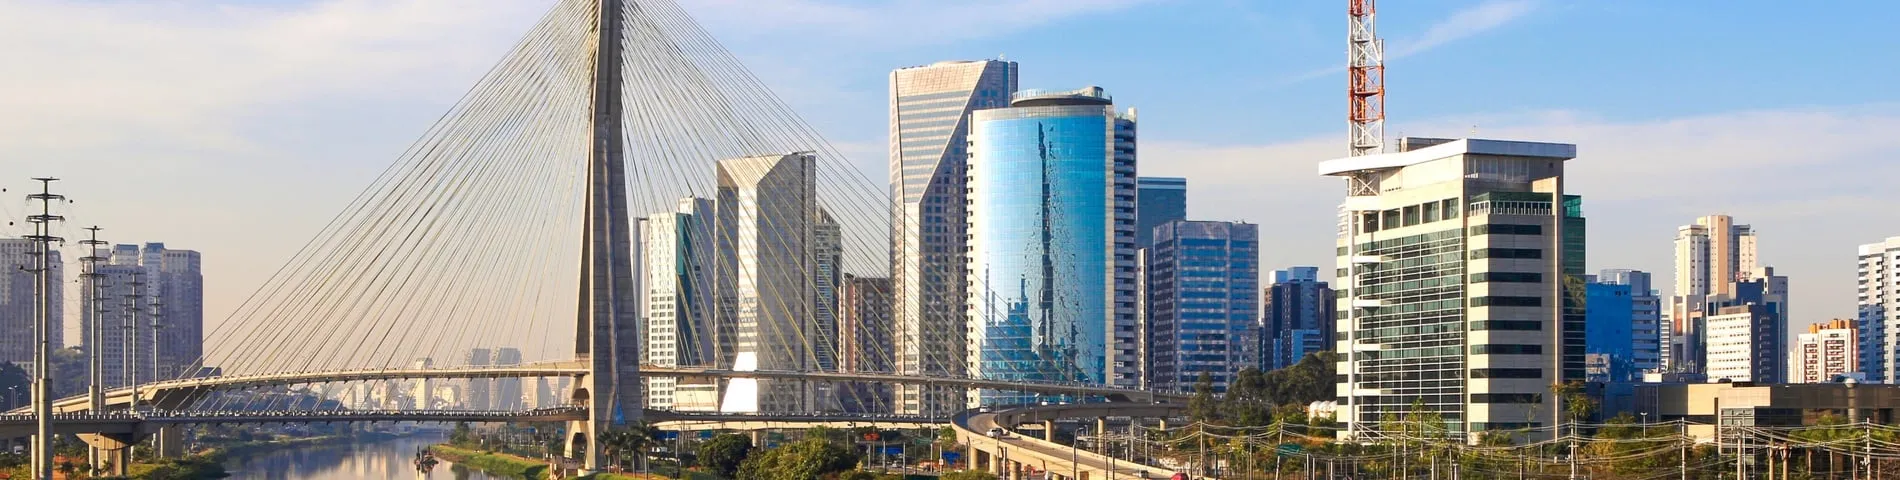 Sao Paulo - 